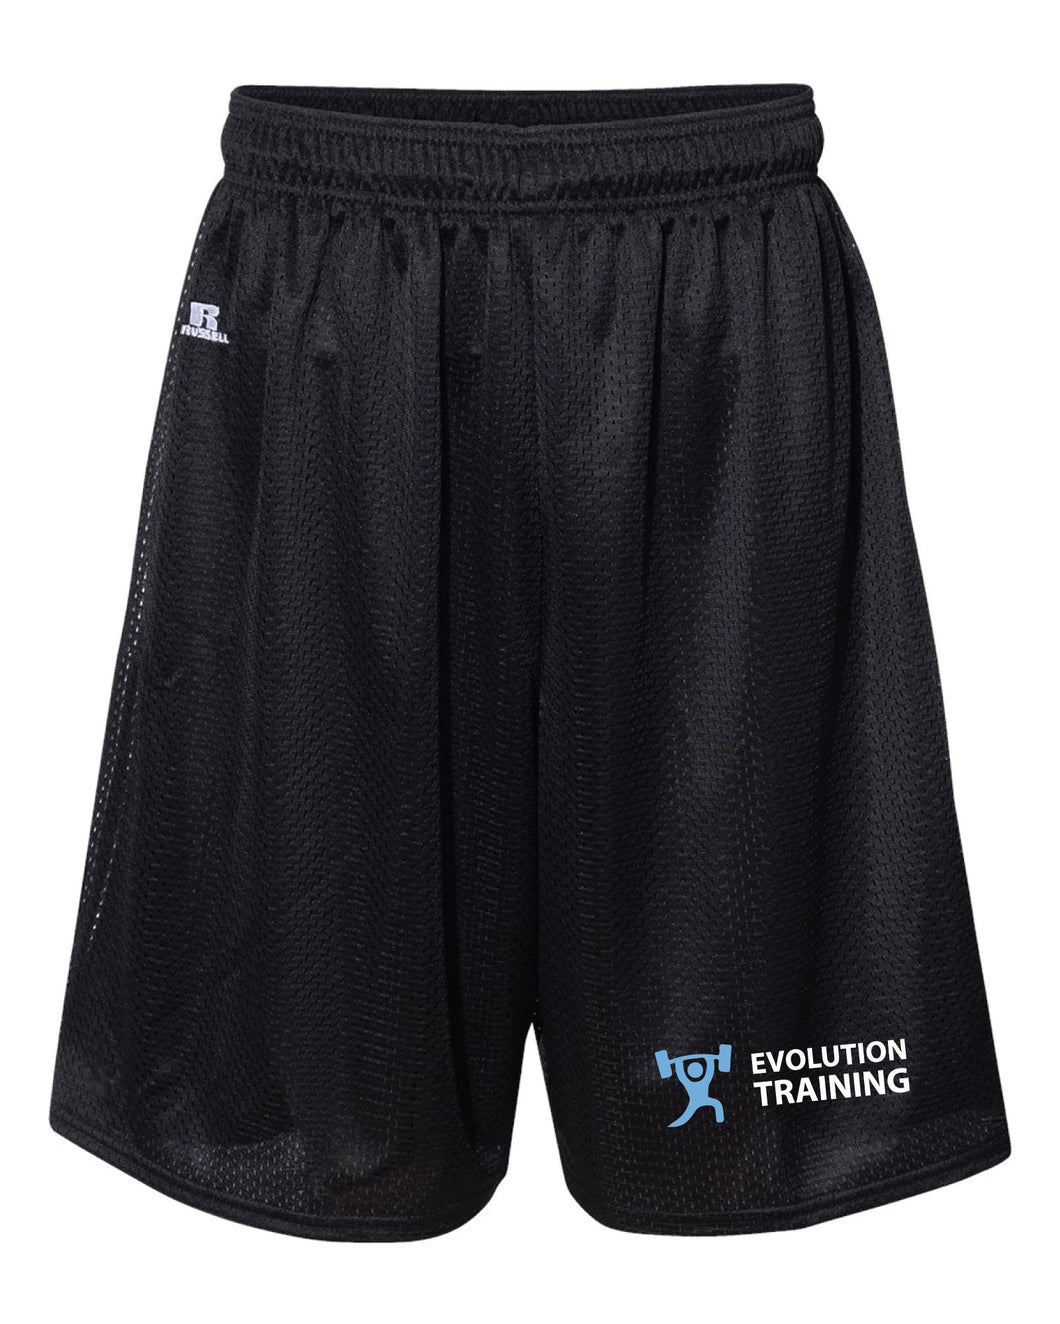 Evolution Russell Athletic Tech Shorts - Black - 5KounT2018